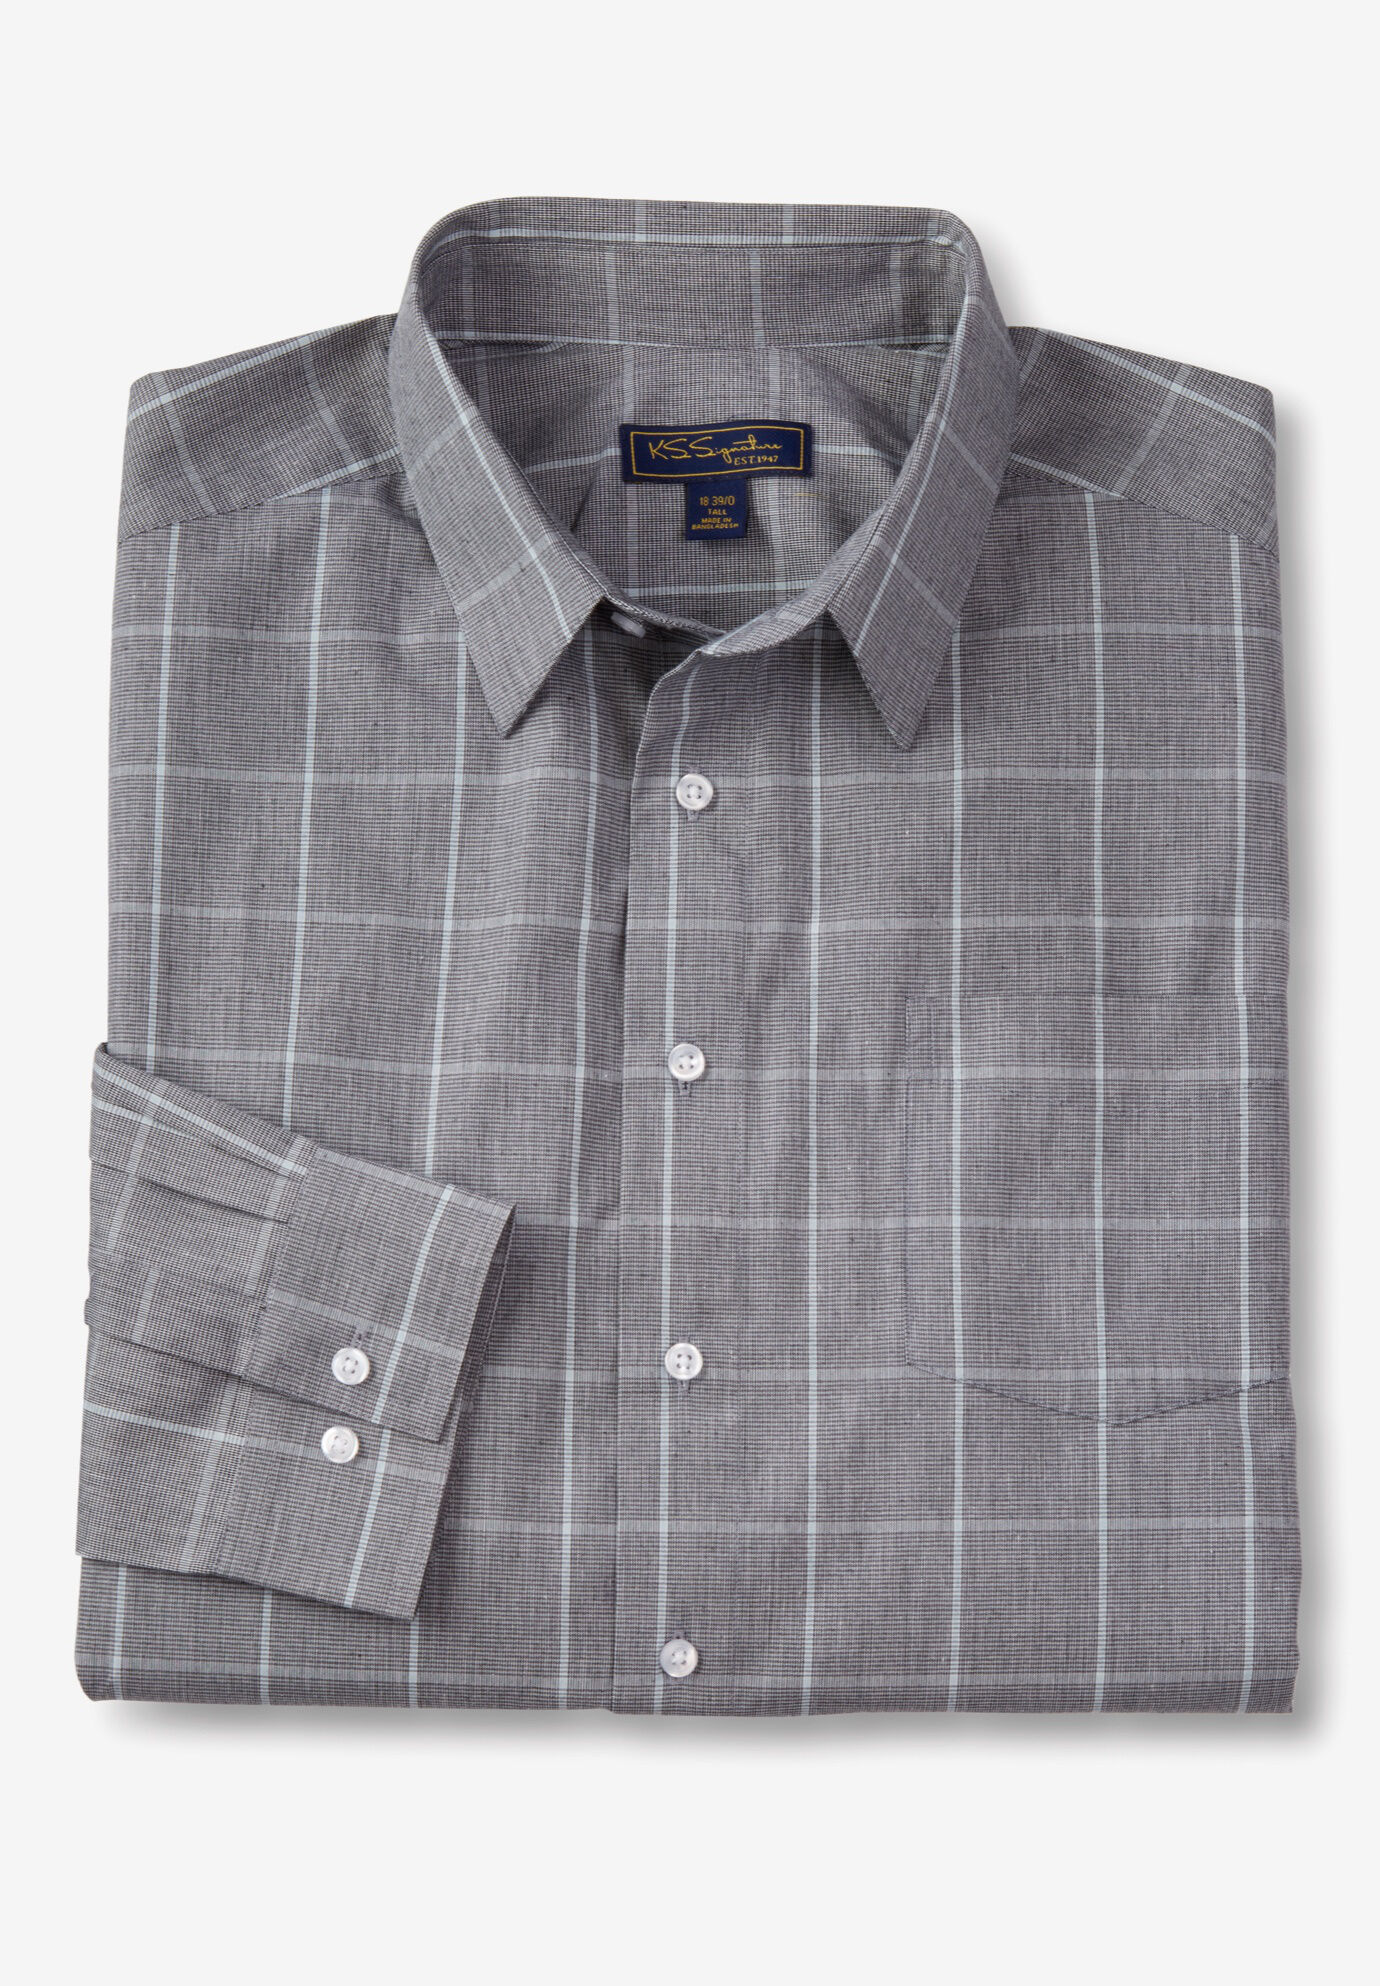 H&M Long Sleeve Shirt light grey-black check pattern elegant Fashion Formal Shirts Long Sleeve Shirts 